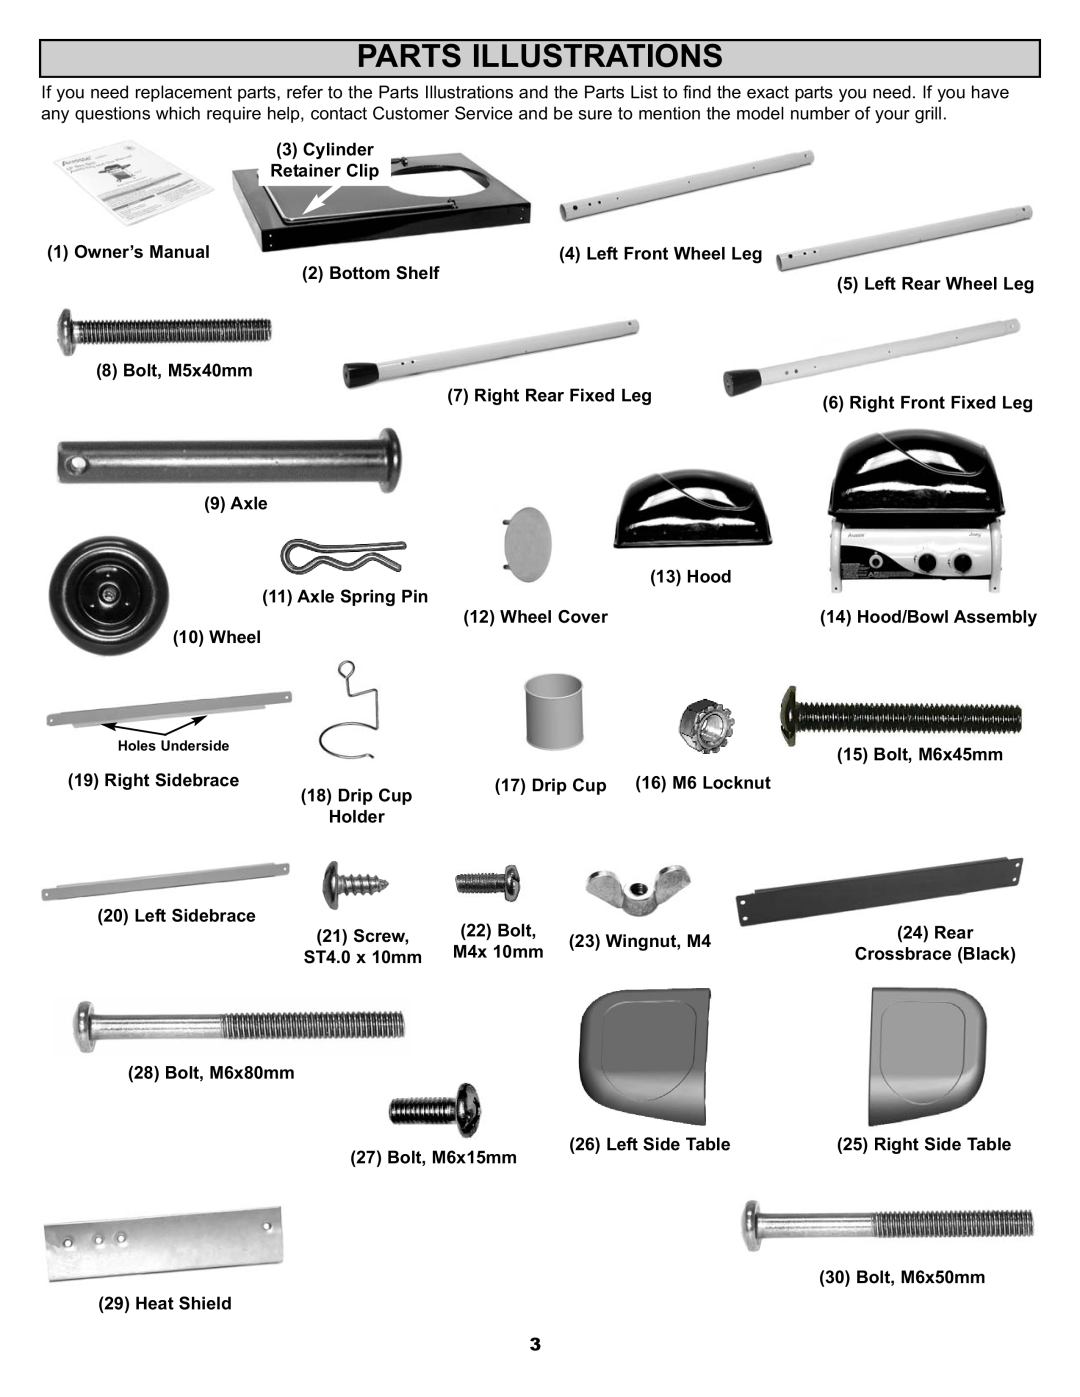 Aussie 7110.7.641 manual Parts Illustrations 